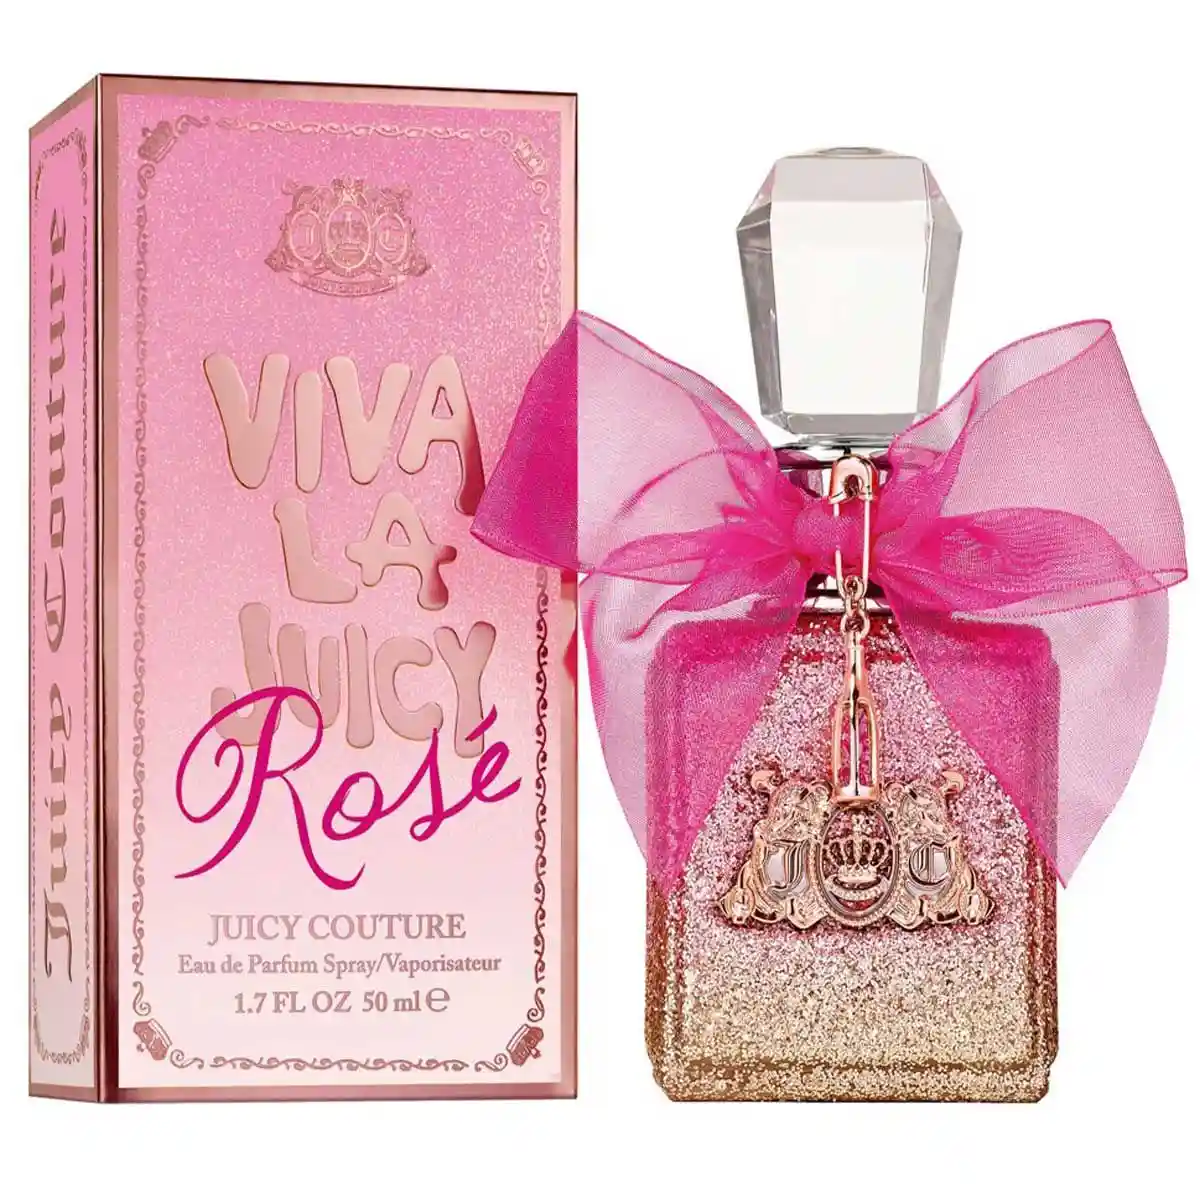 Hình 1 - Juicy Couture Viva La Juicy Rose EDP 50ml